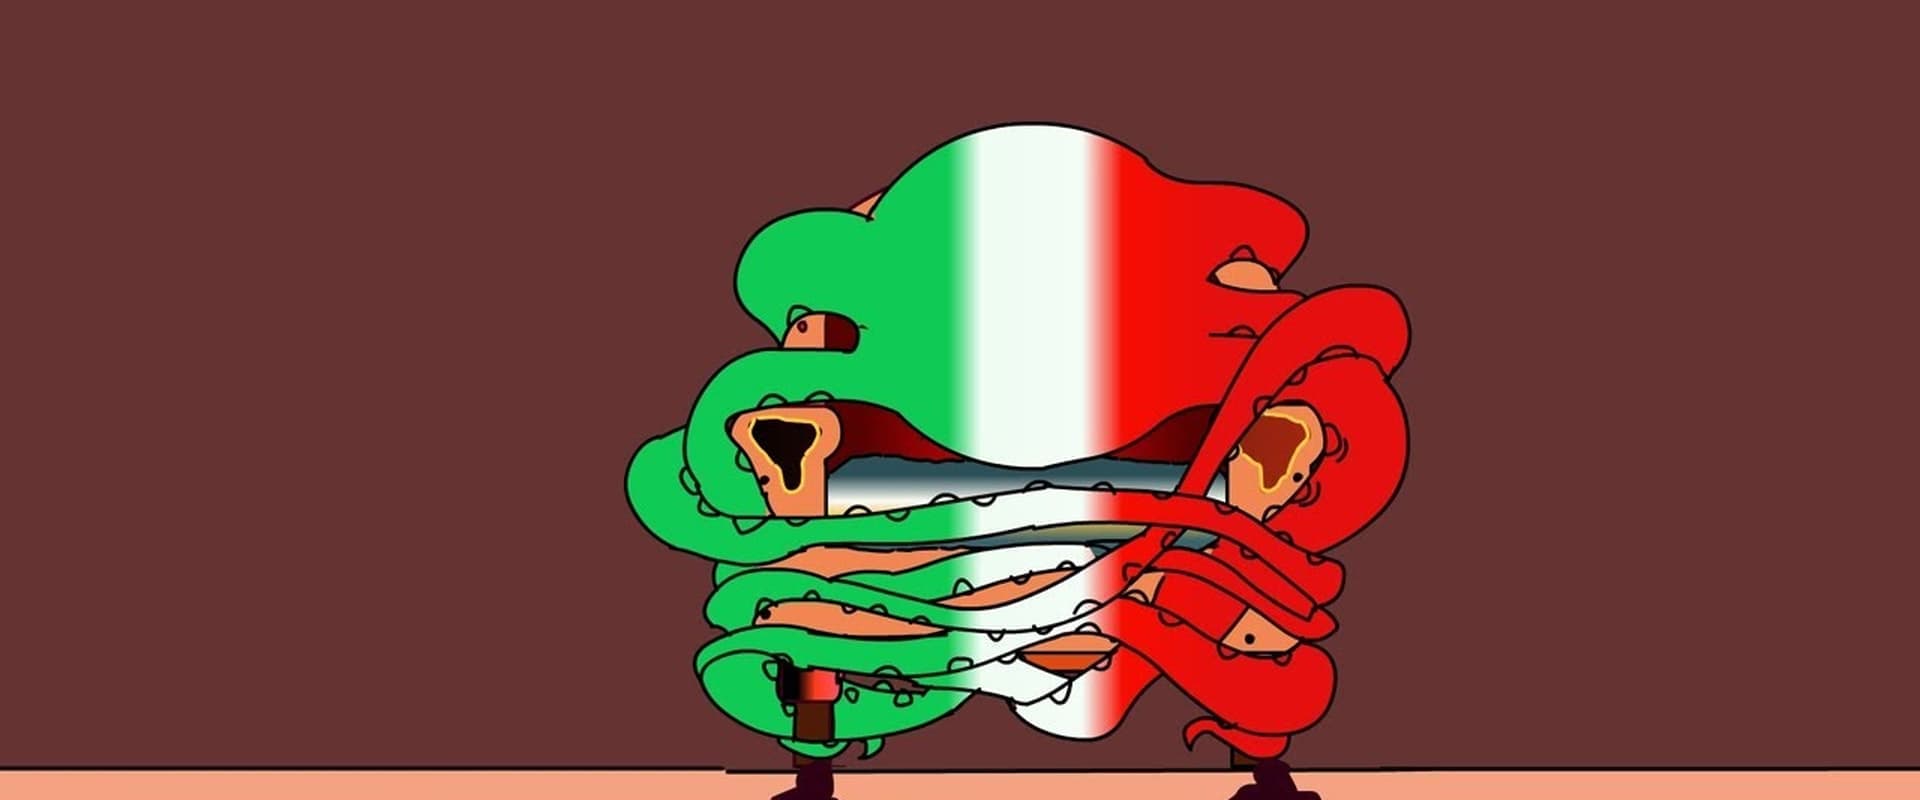 Europe & Italy